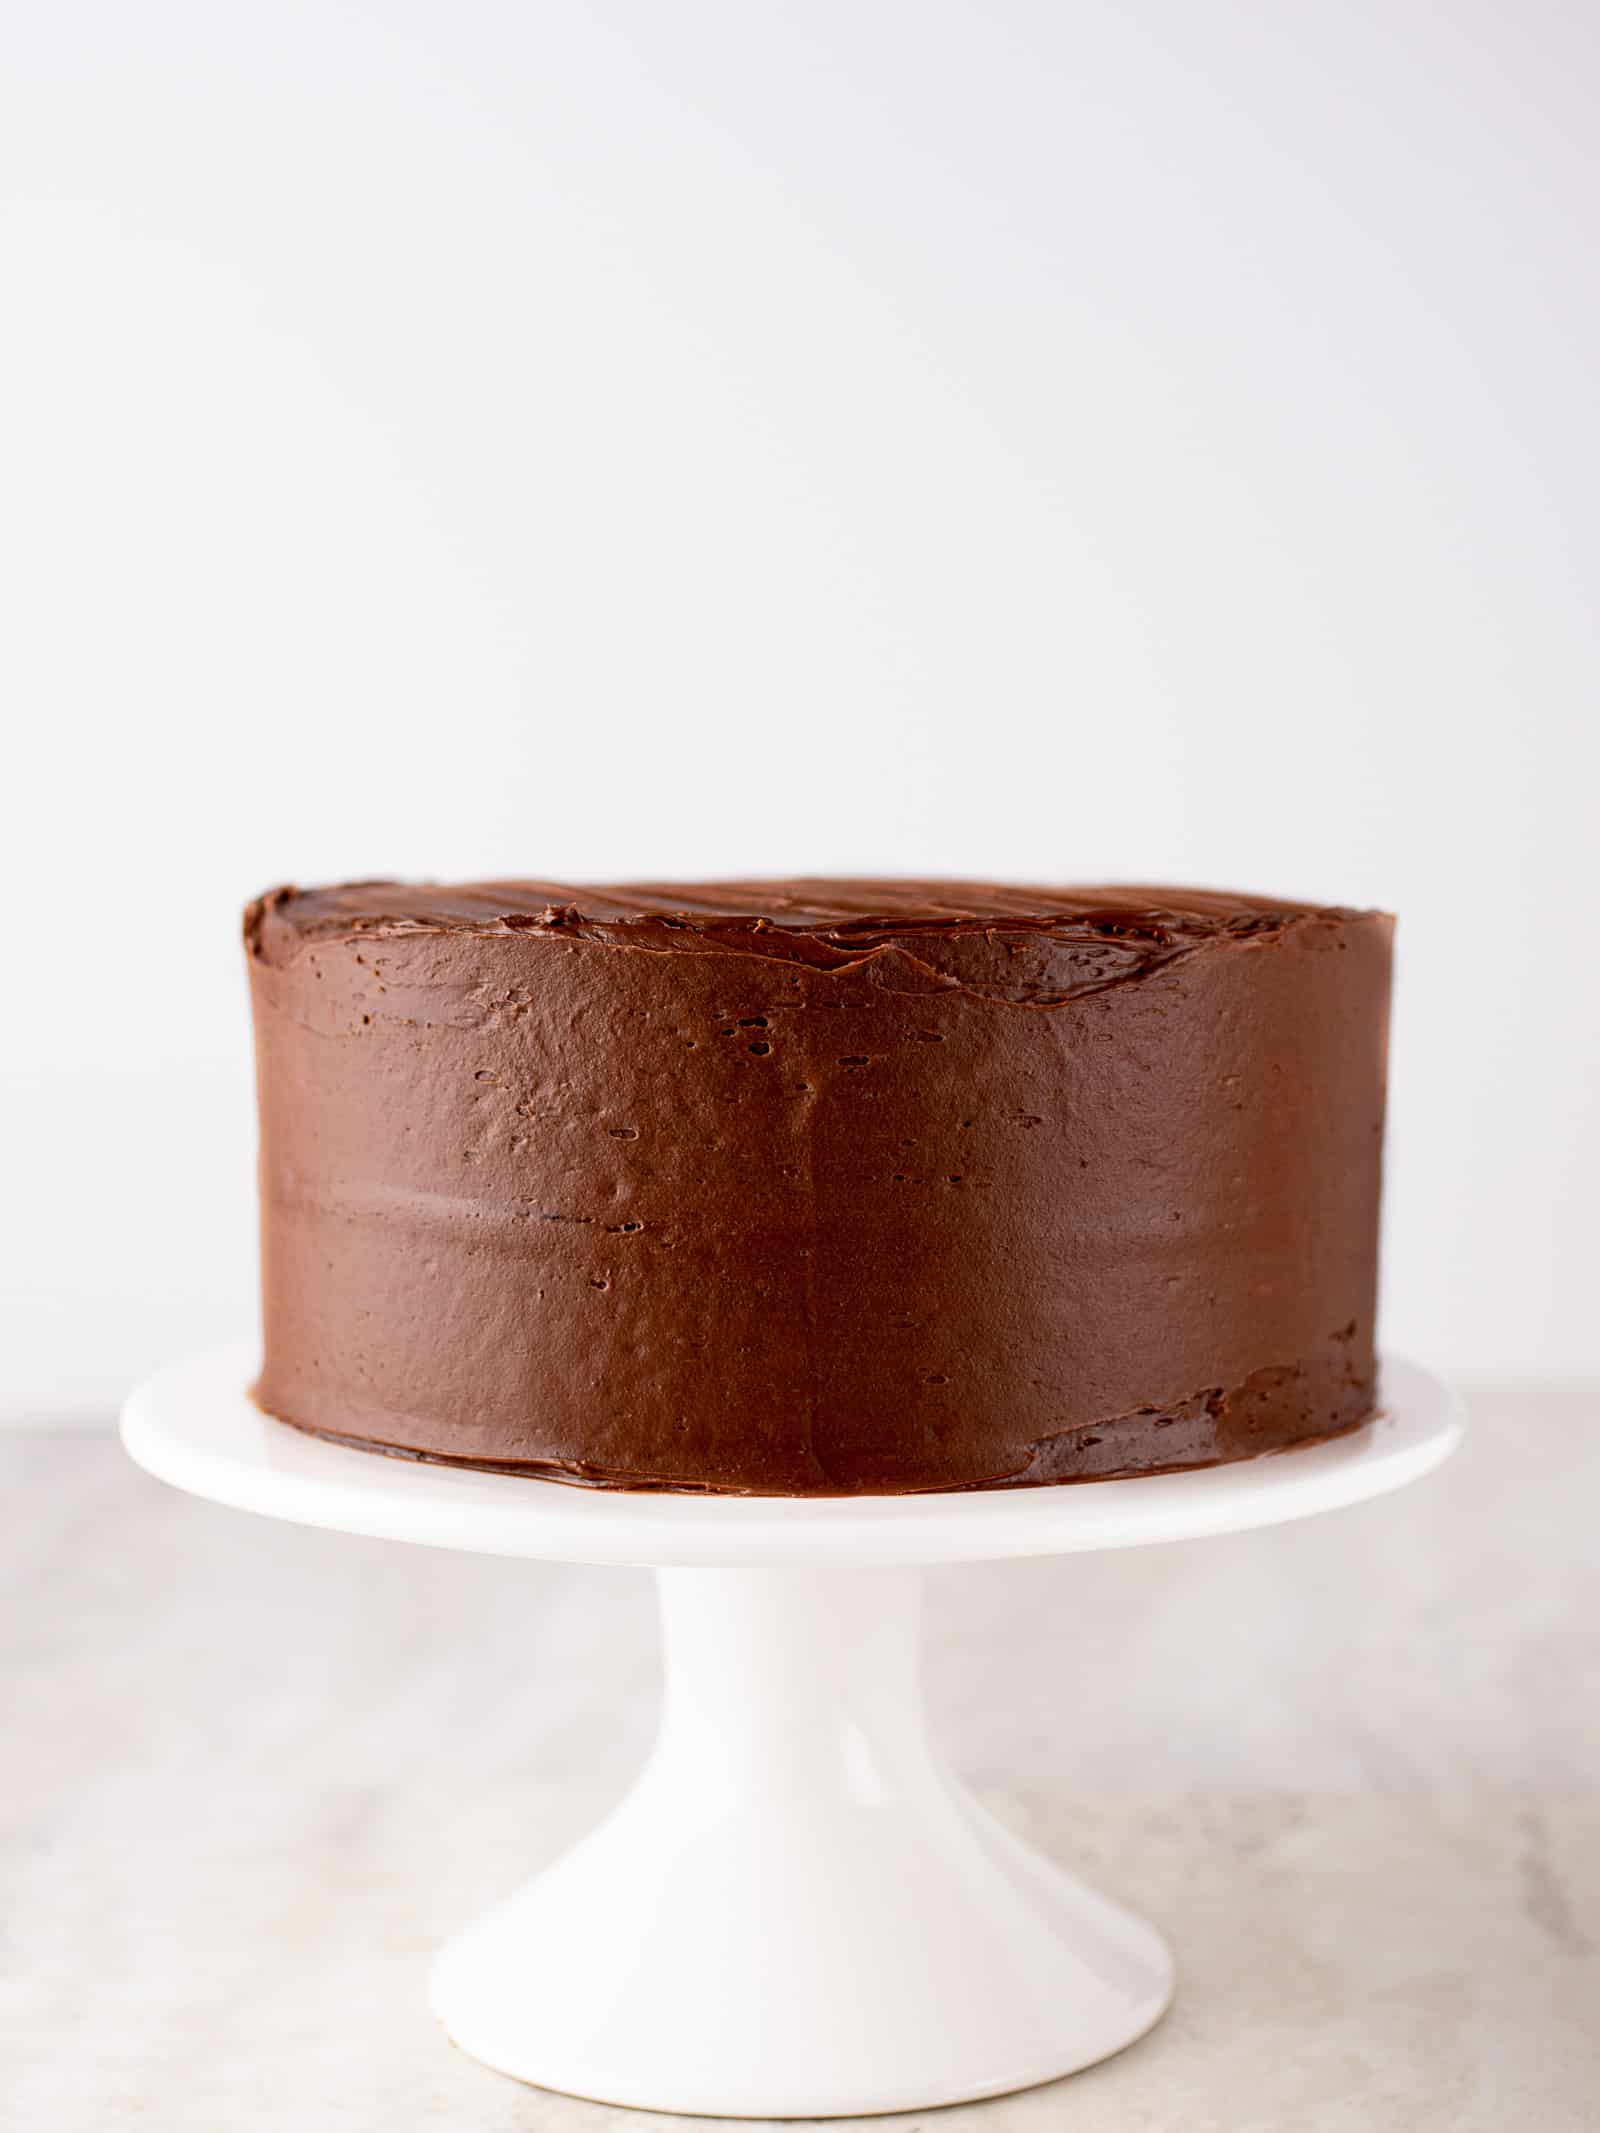 Gluten-free chocolate cake on a cake stand.